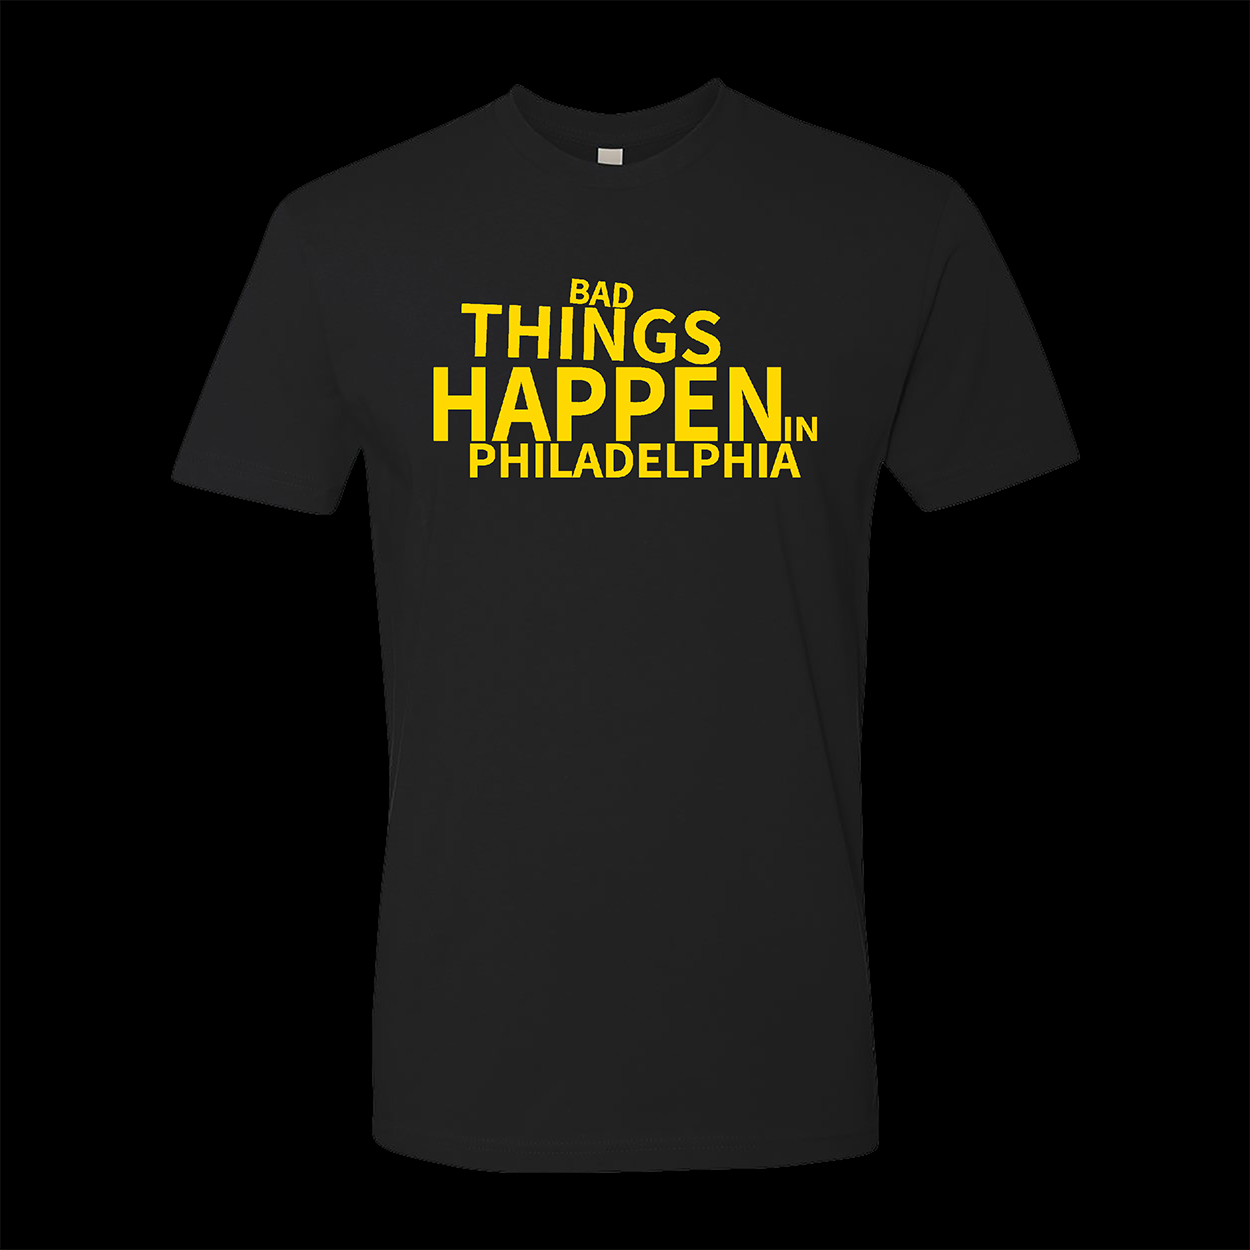 Bad Things Happen in Philadelphia T-shirt Black color